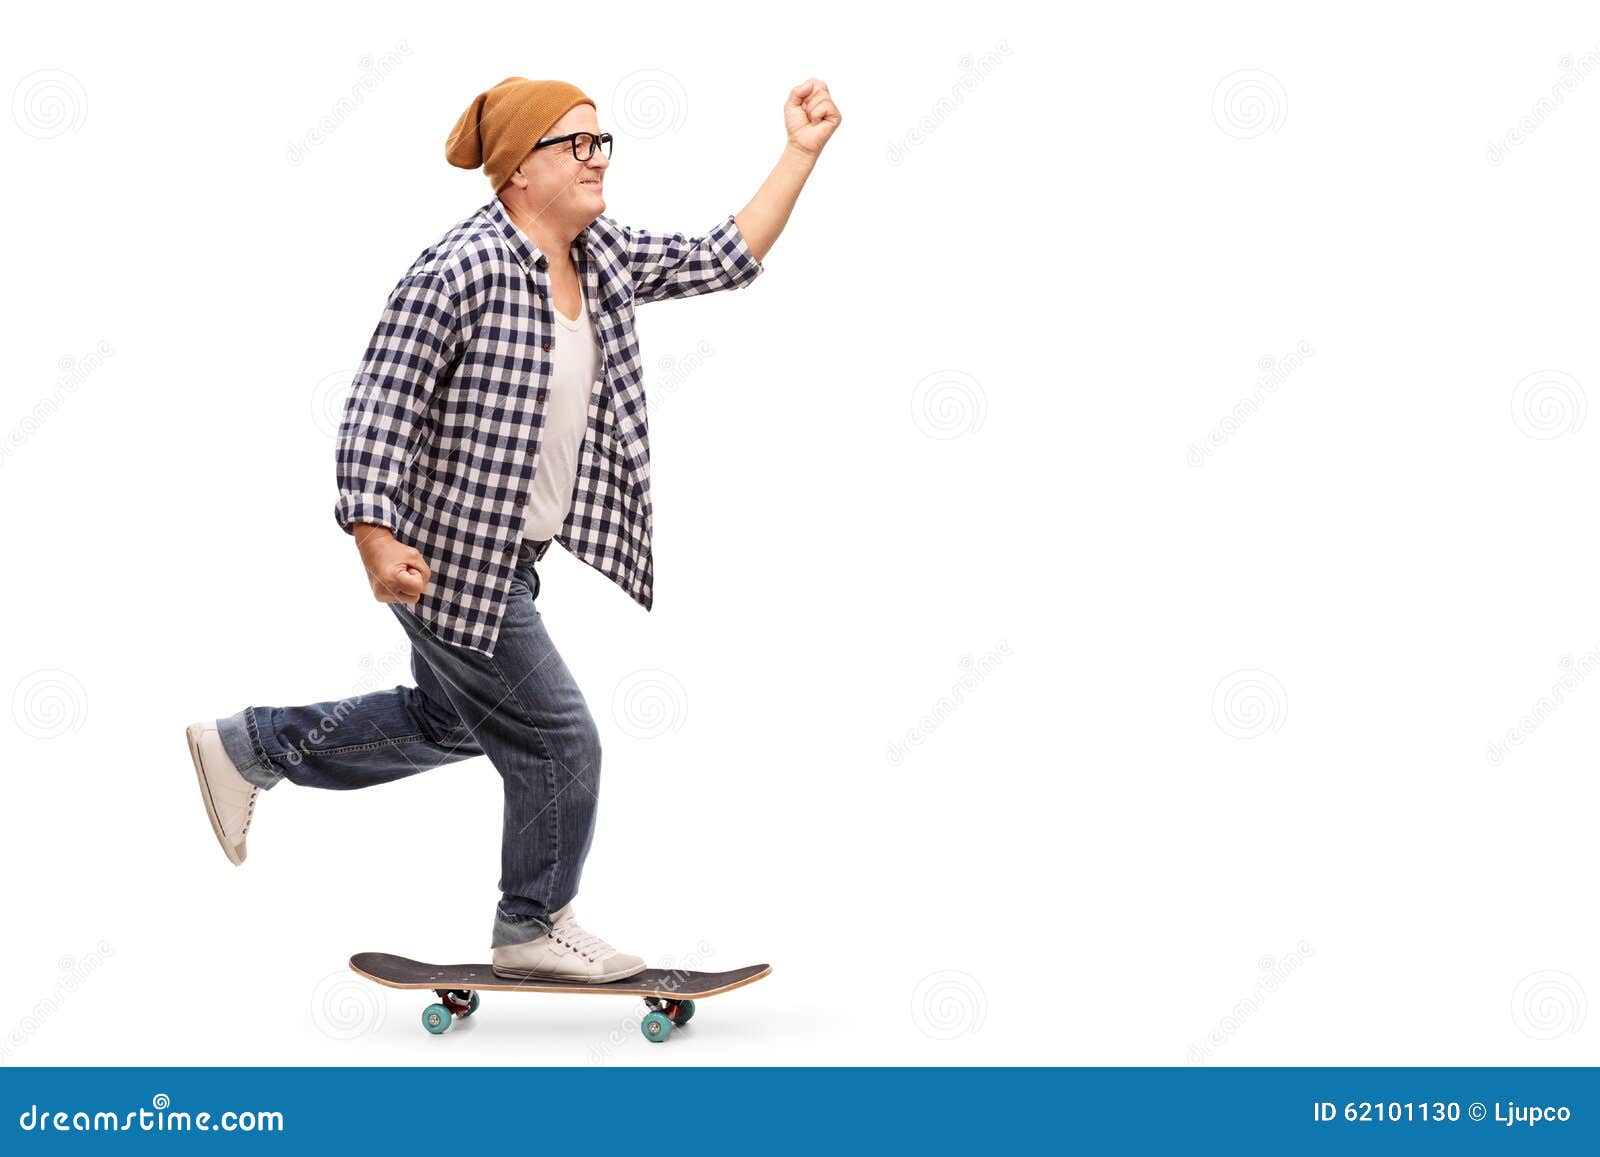 Joyful Senior Skater Riding a Skateboard Stock Photo - Image of cool ...